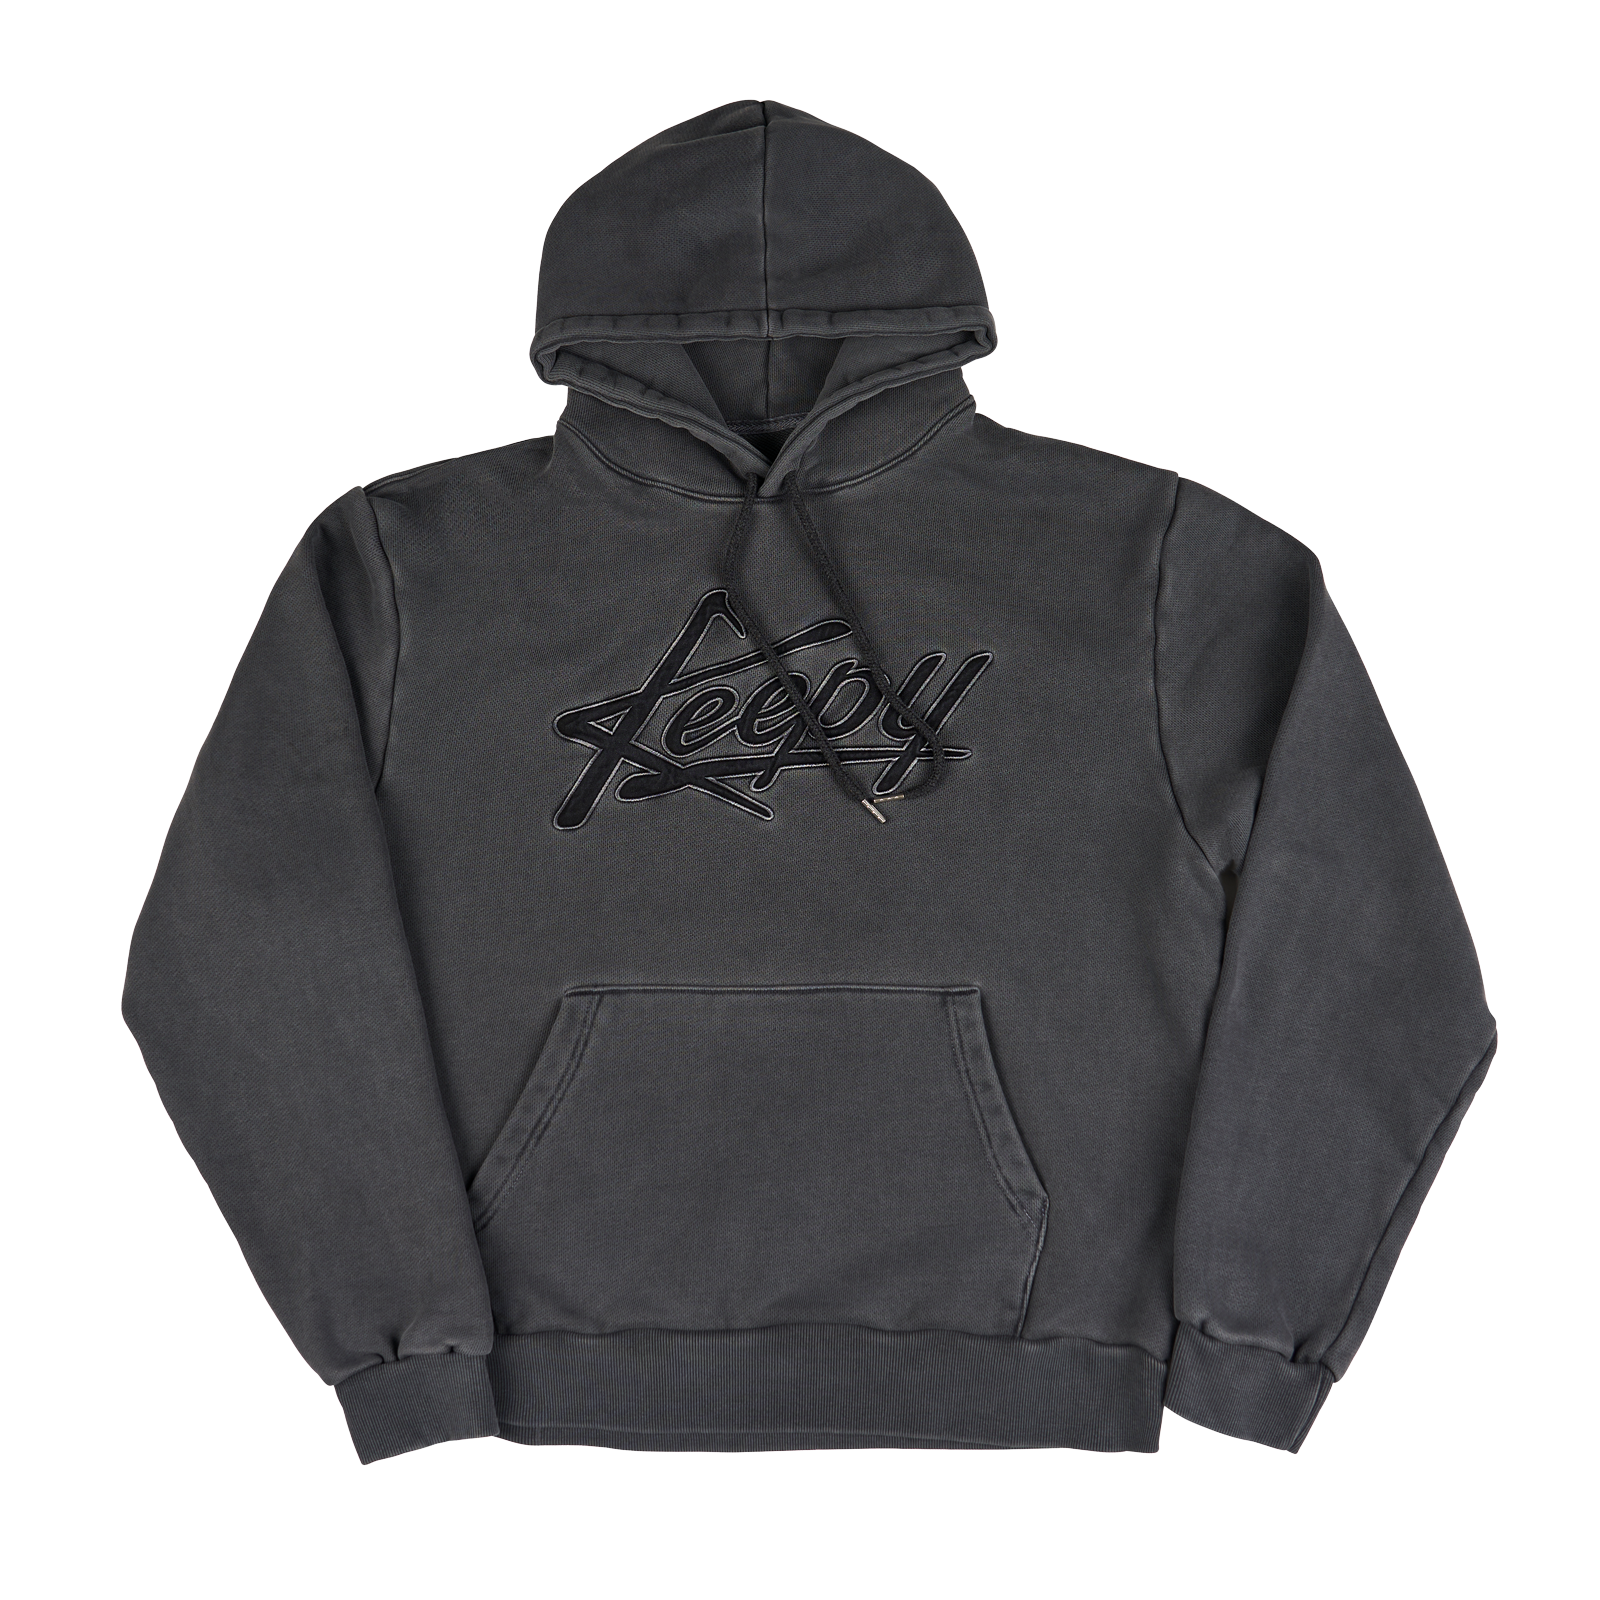 Charcoal gray hoodie